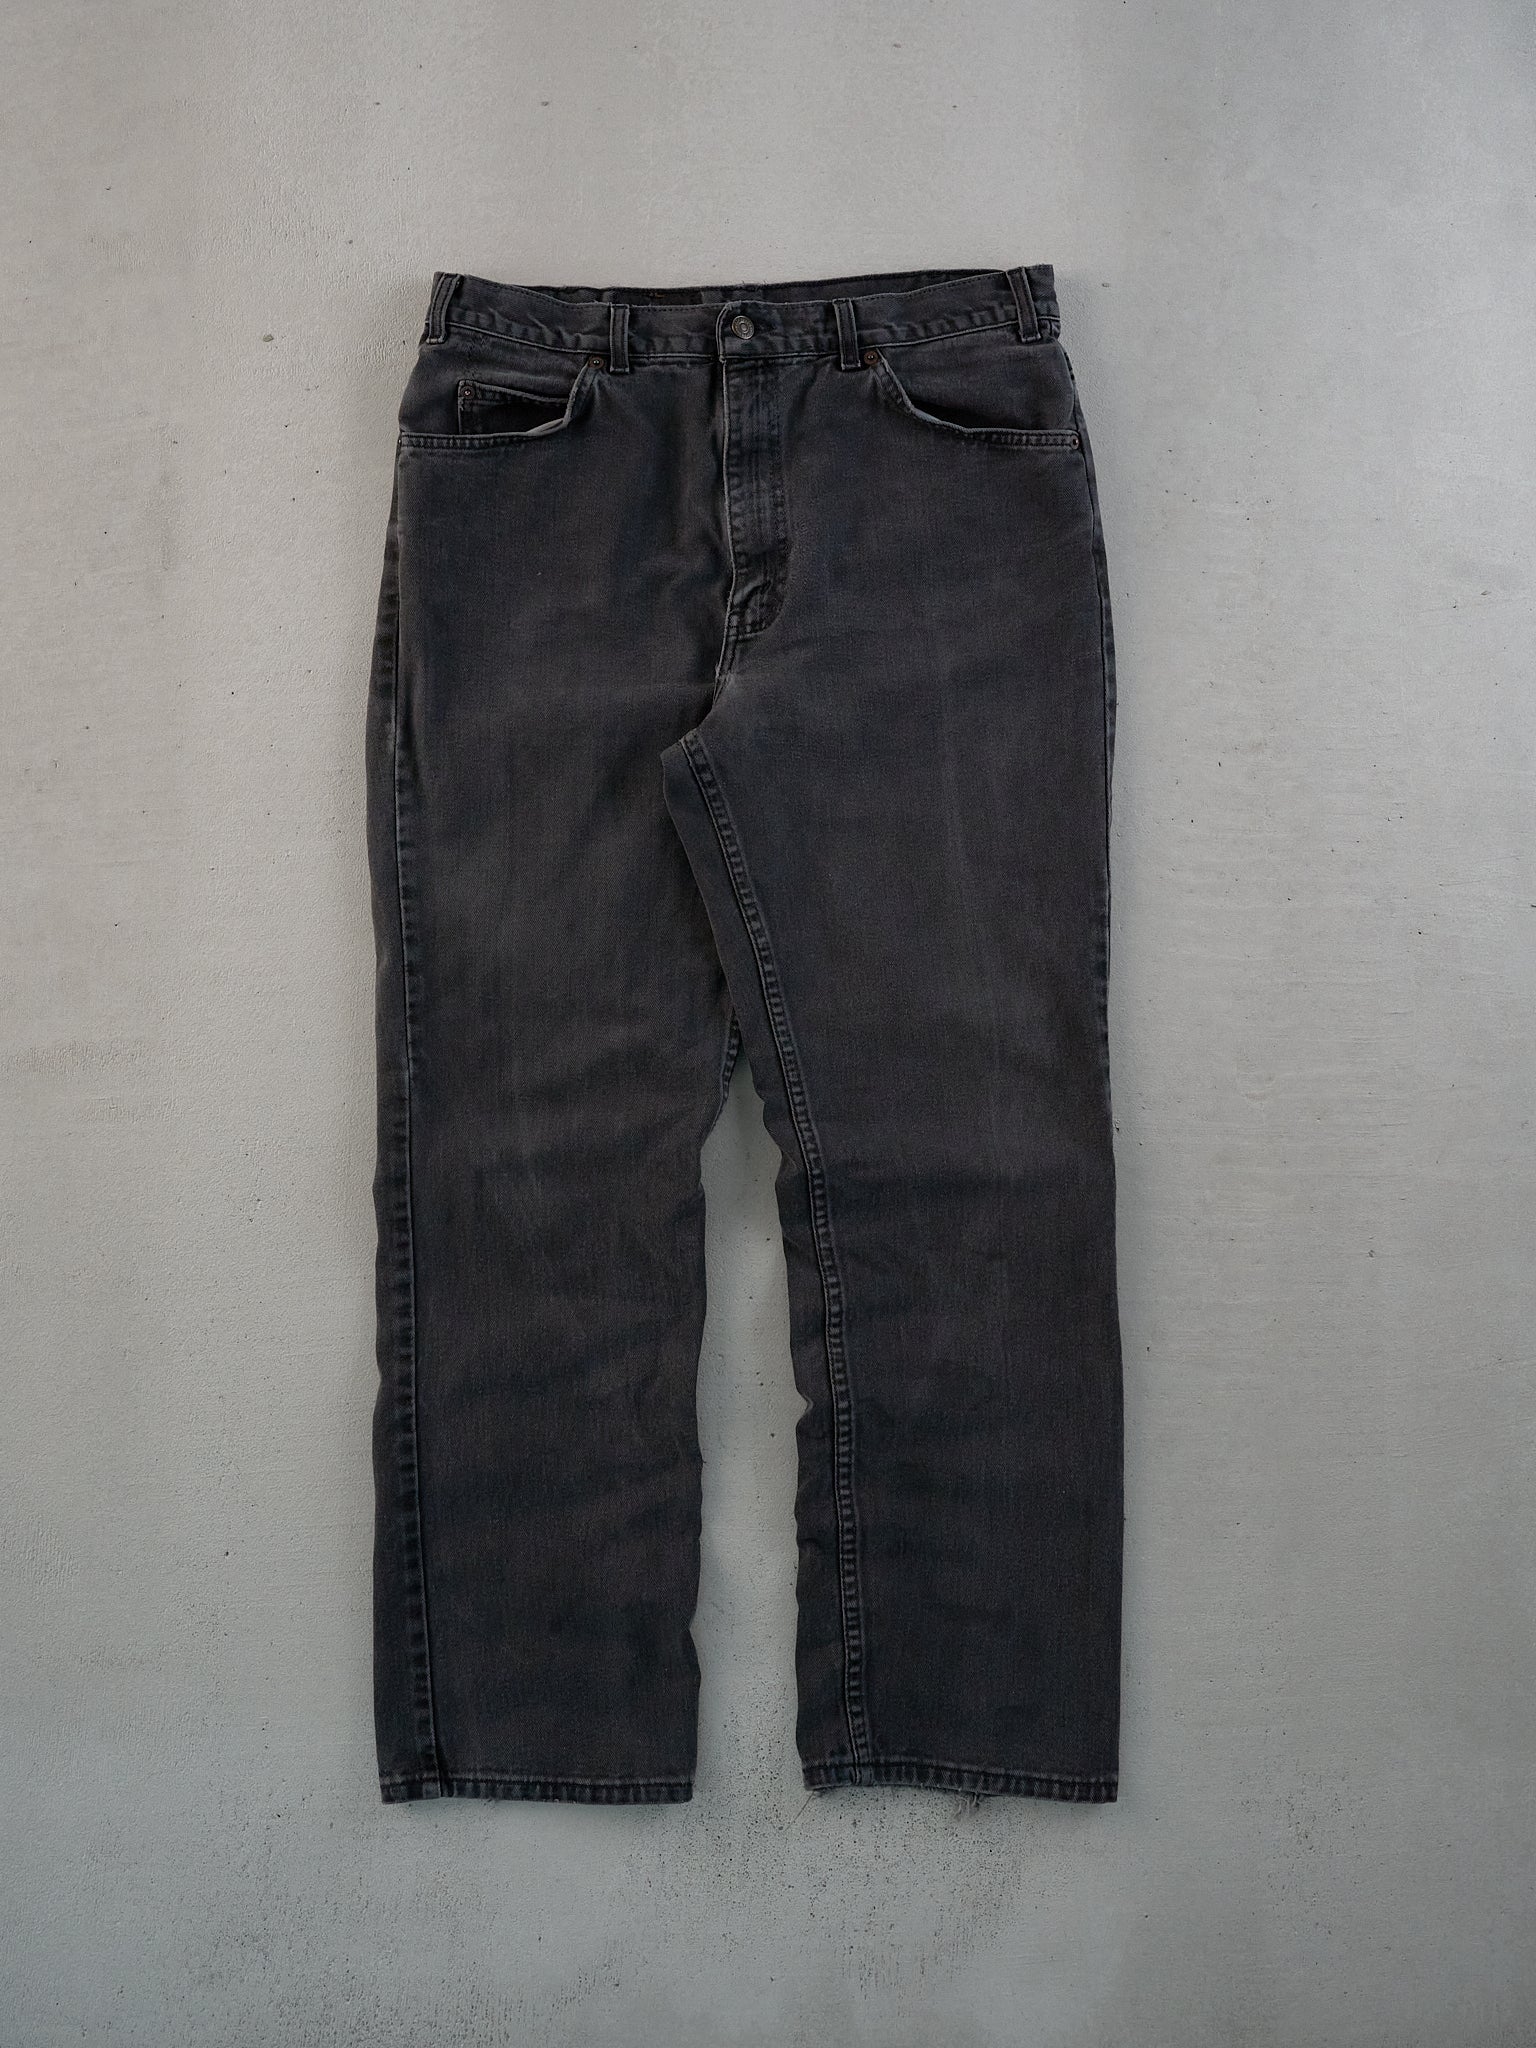 Vintage 70s Grey Levi's 506 Denim Jeans (33x29)